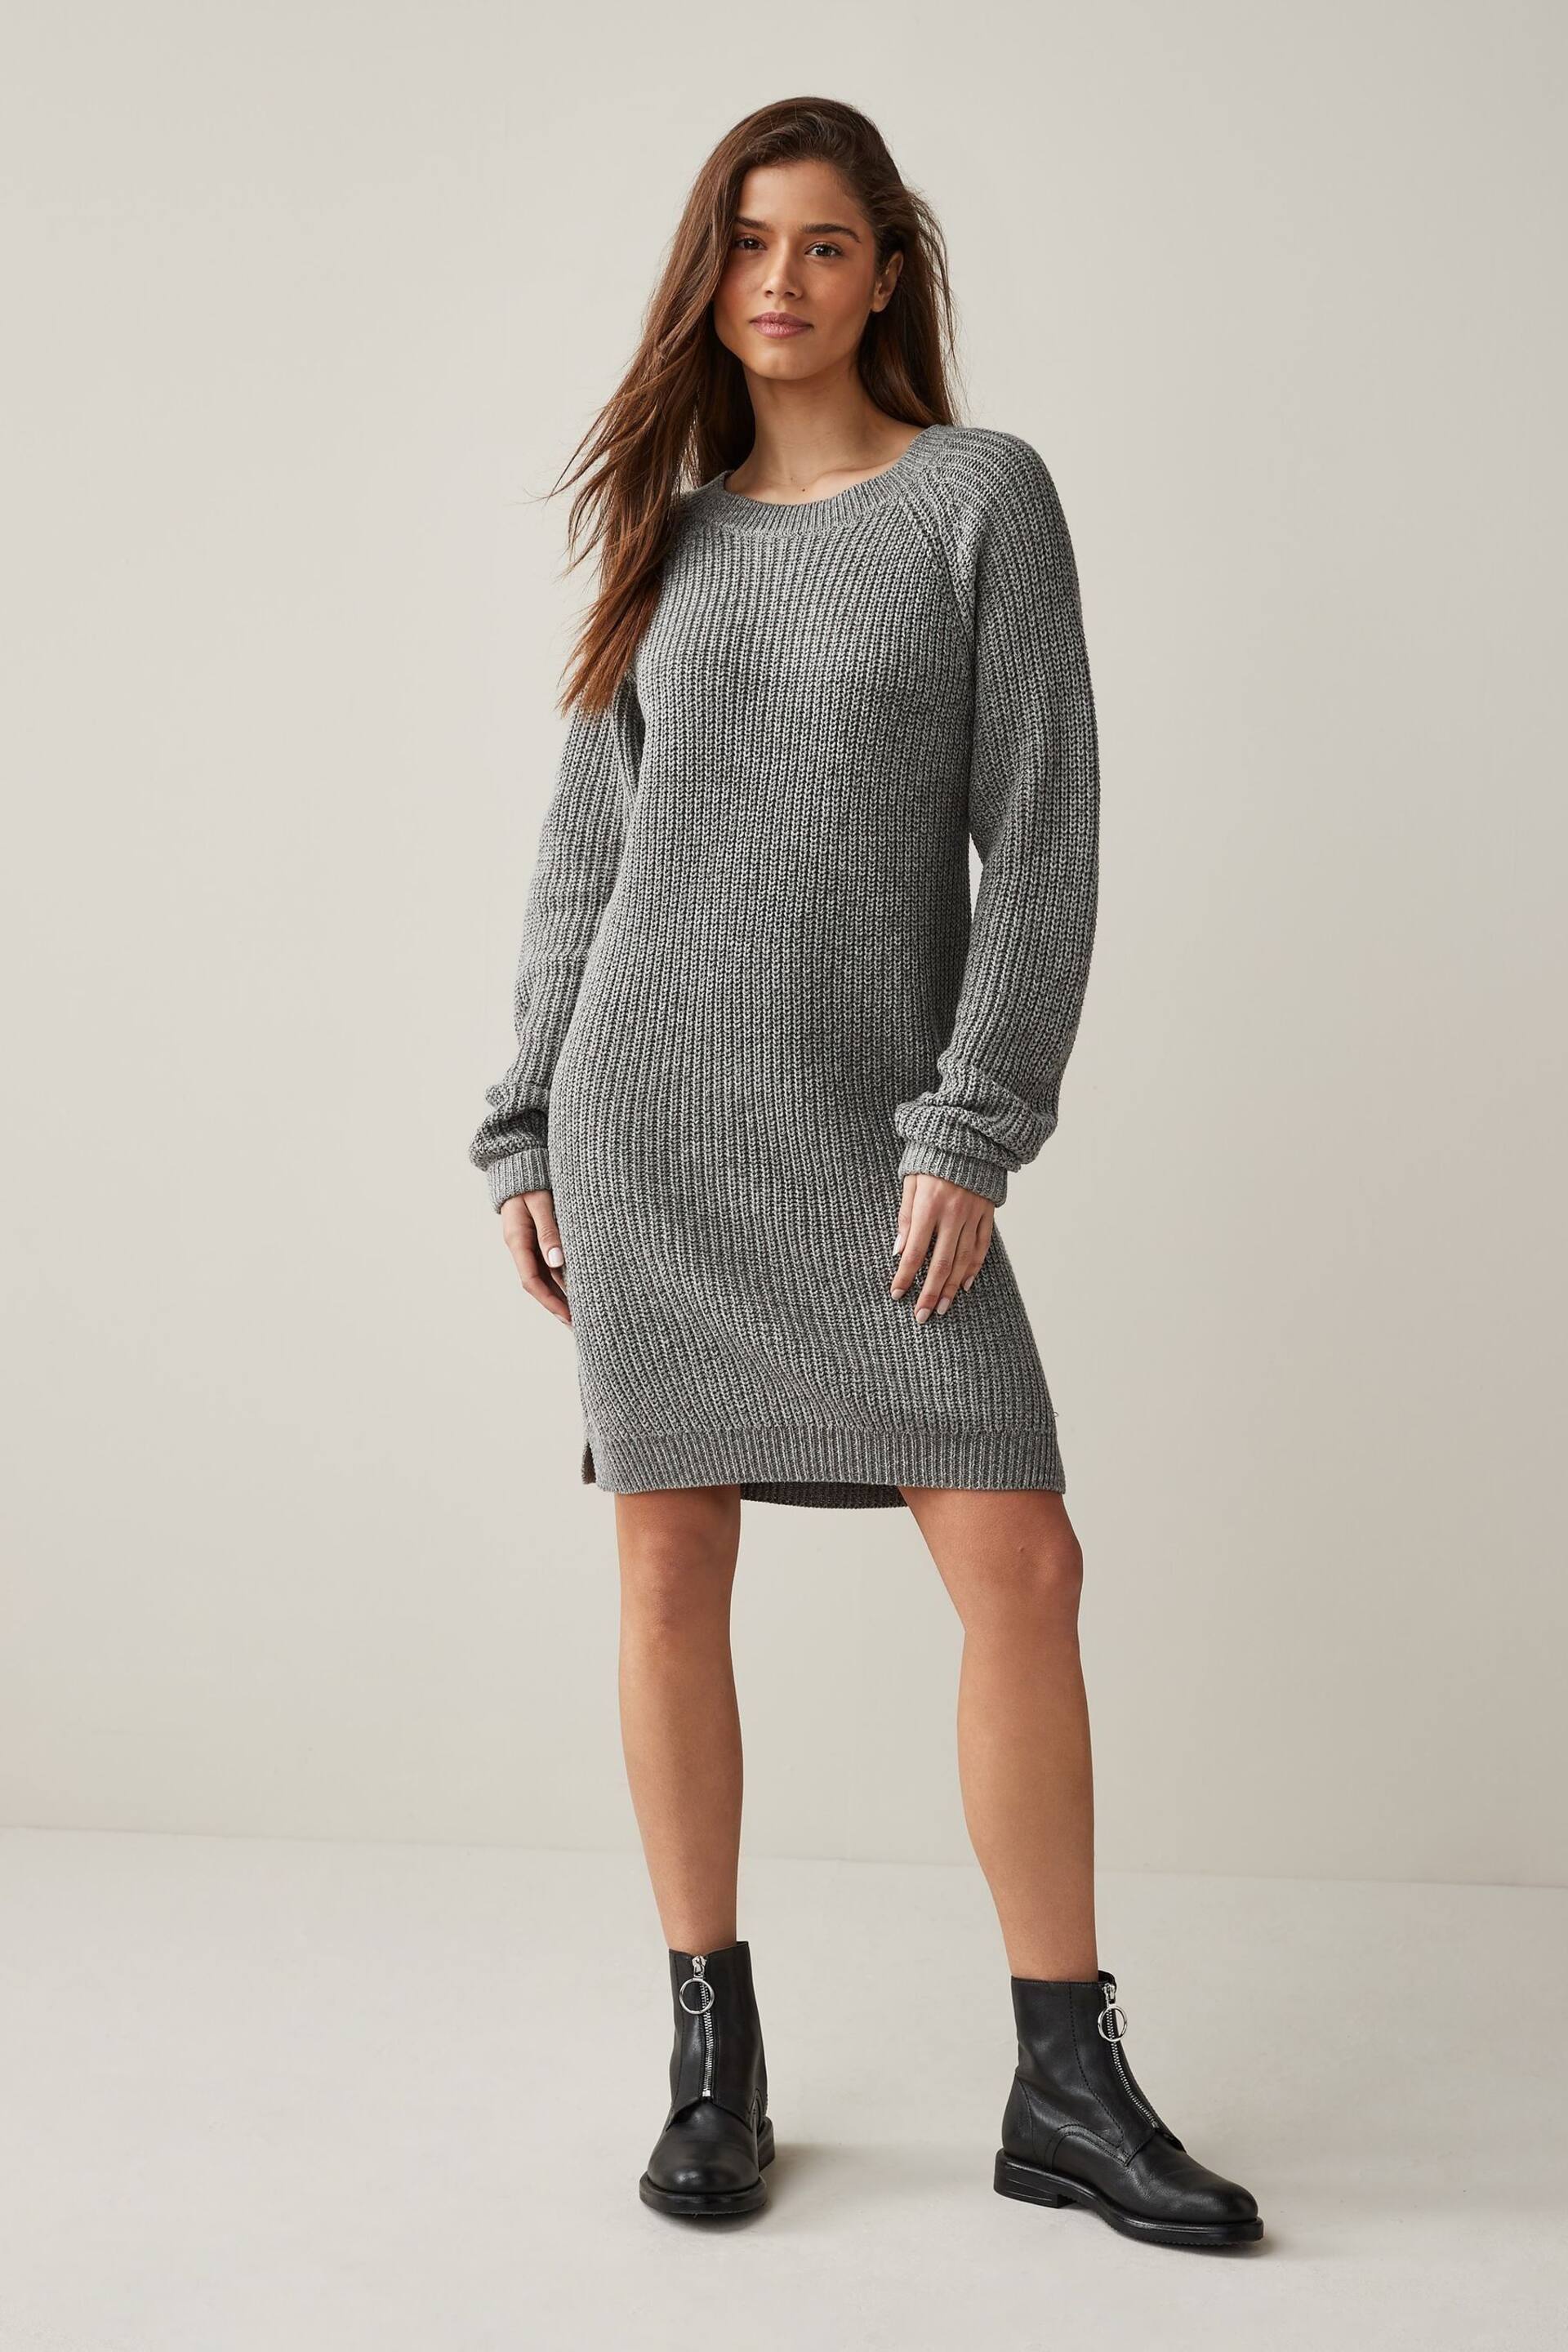 NOISY MAY Grey Long Sleeve Jumper Dress - Image 1 of 5